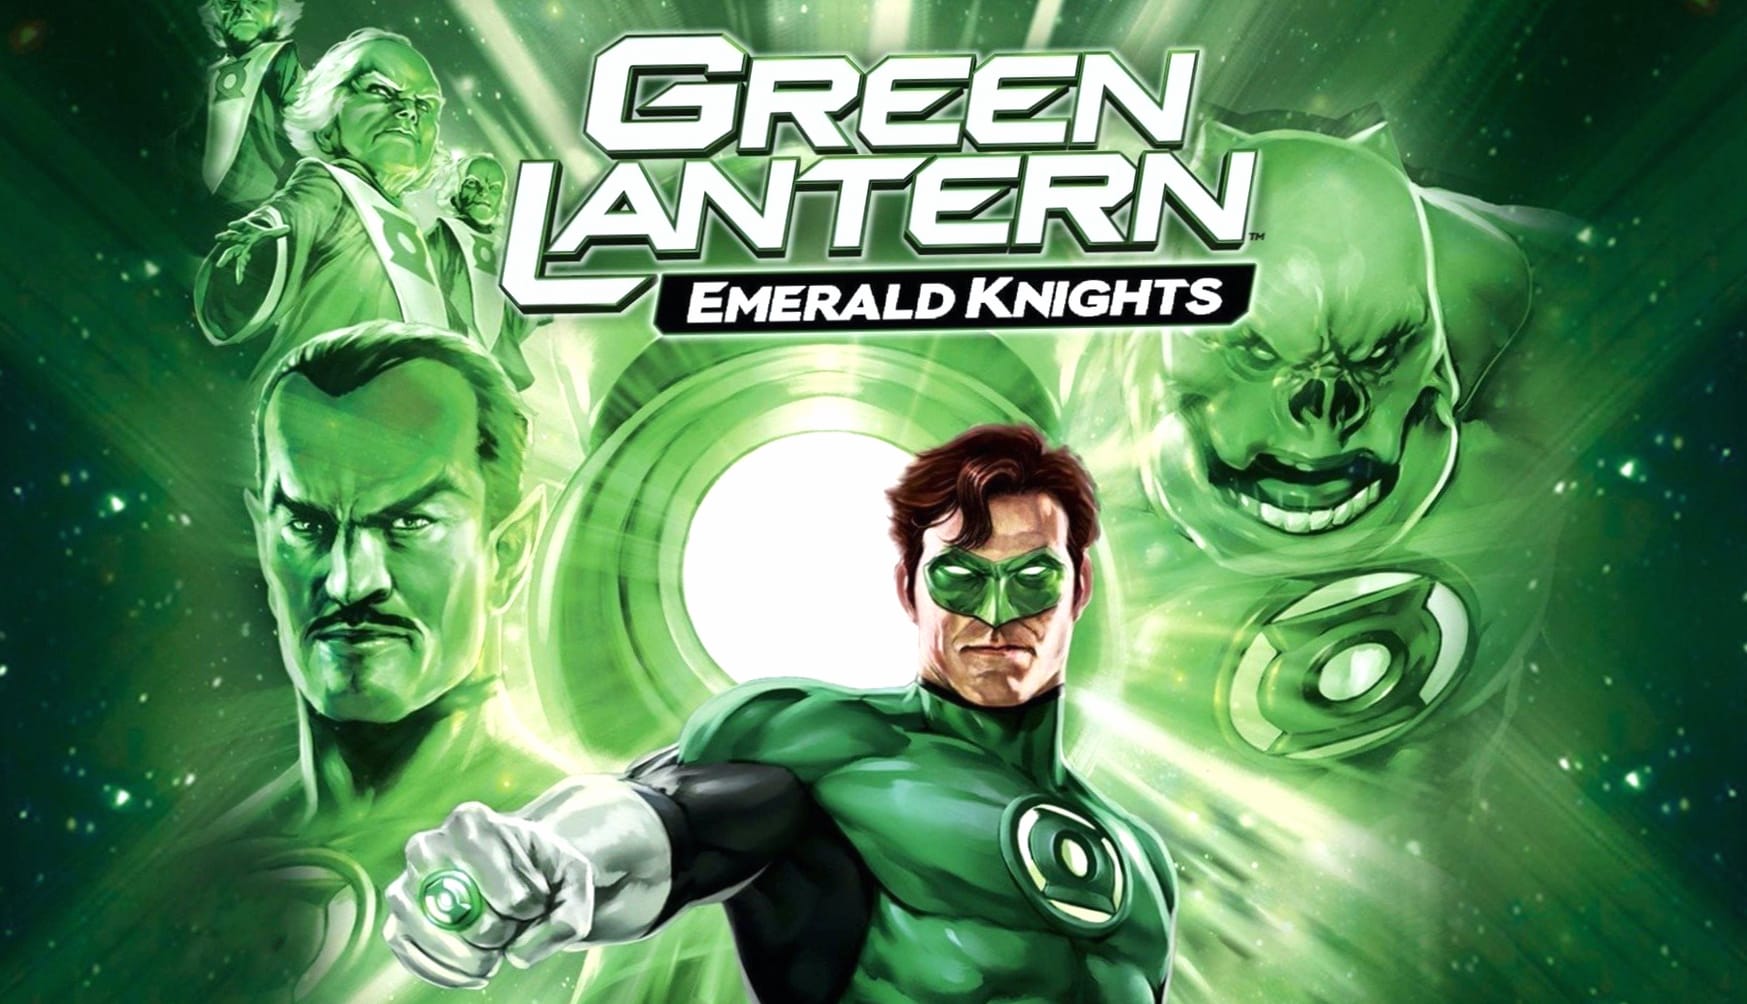 Green Lantern emerald knights at 1024 x 1024 iPad size wallpapers HD quality